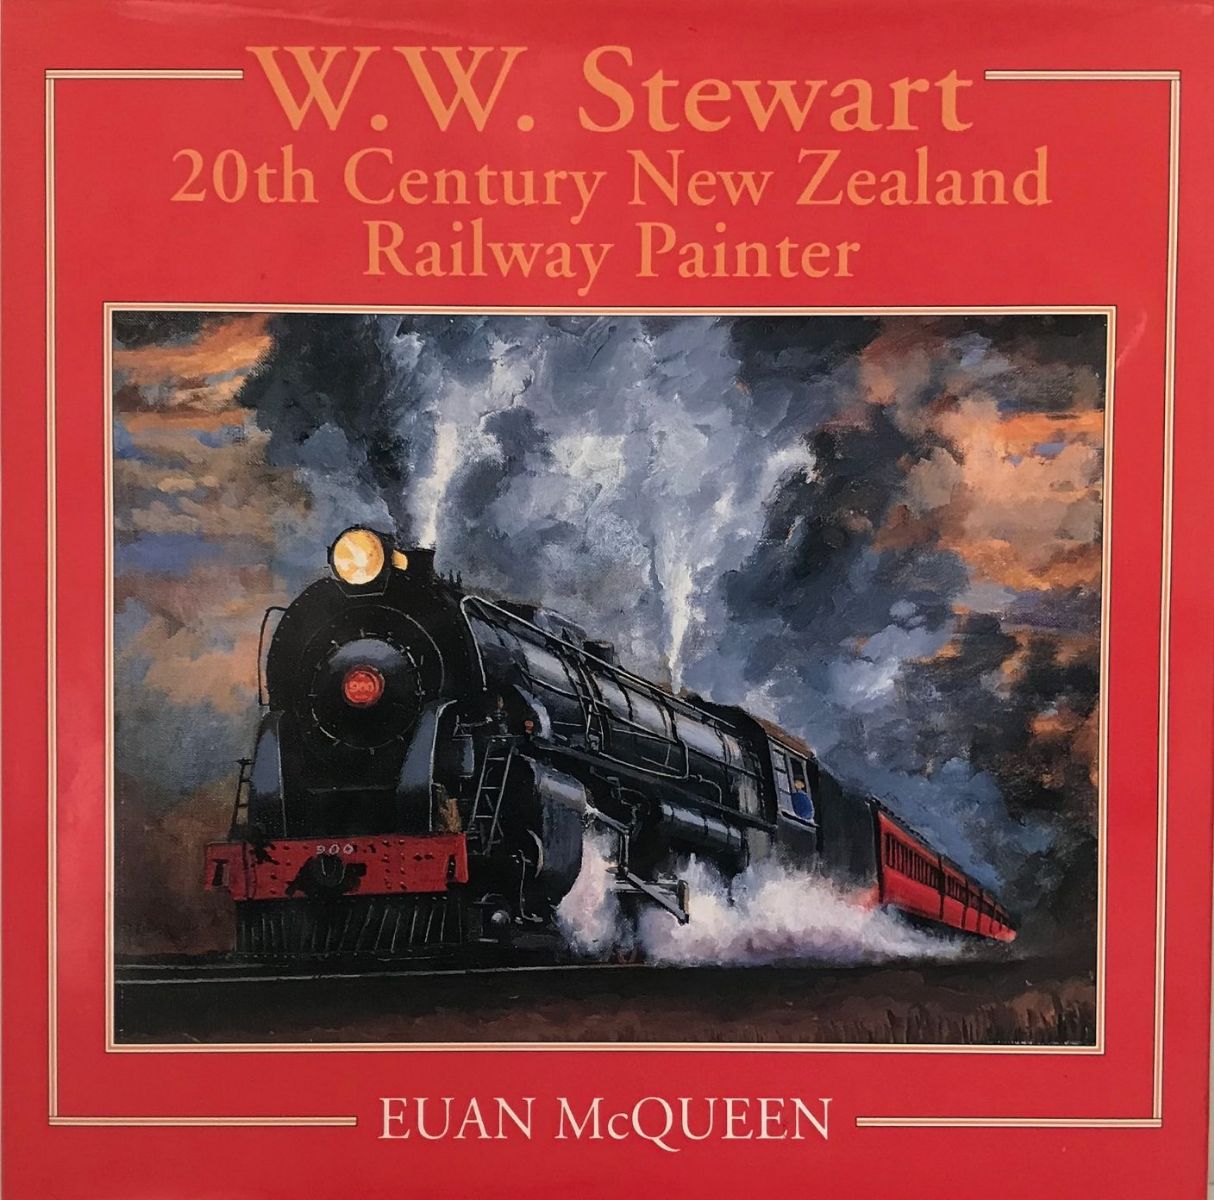 20TH CENTURY NEW ZEALAND RAILWAY PAINTER - W. W. Stewart